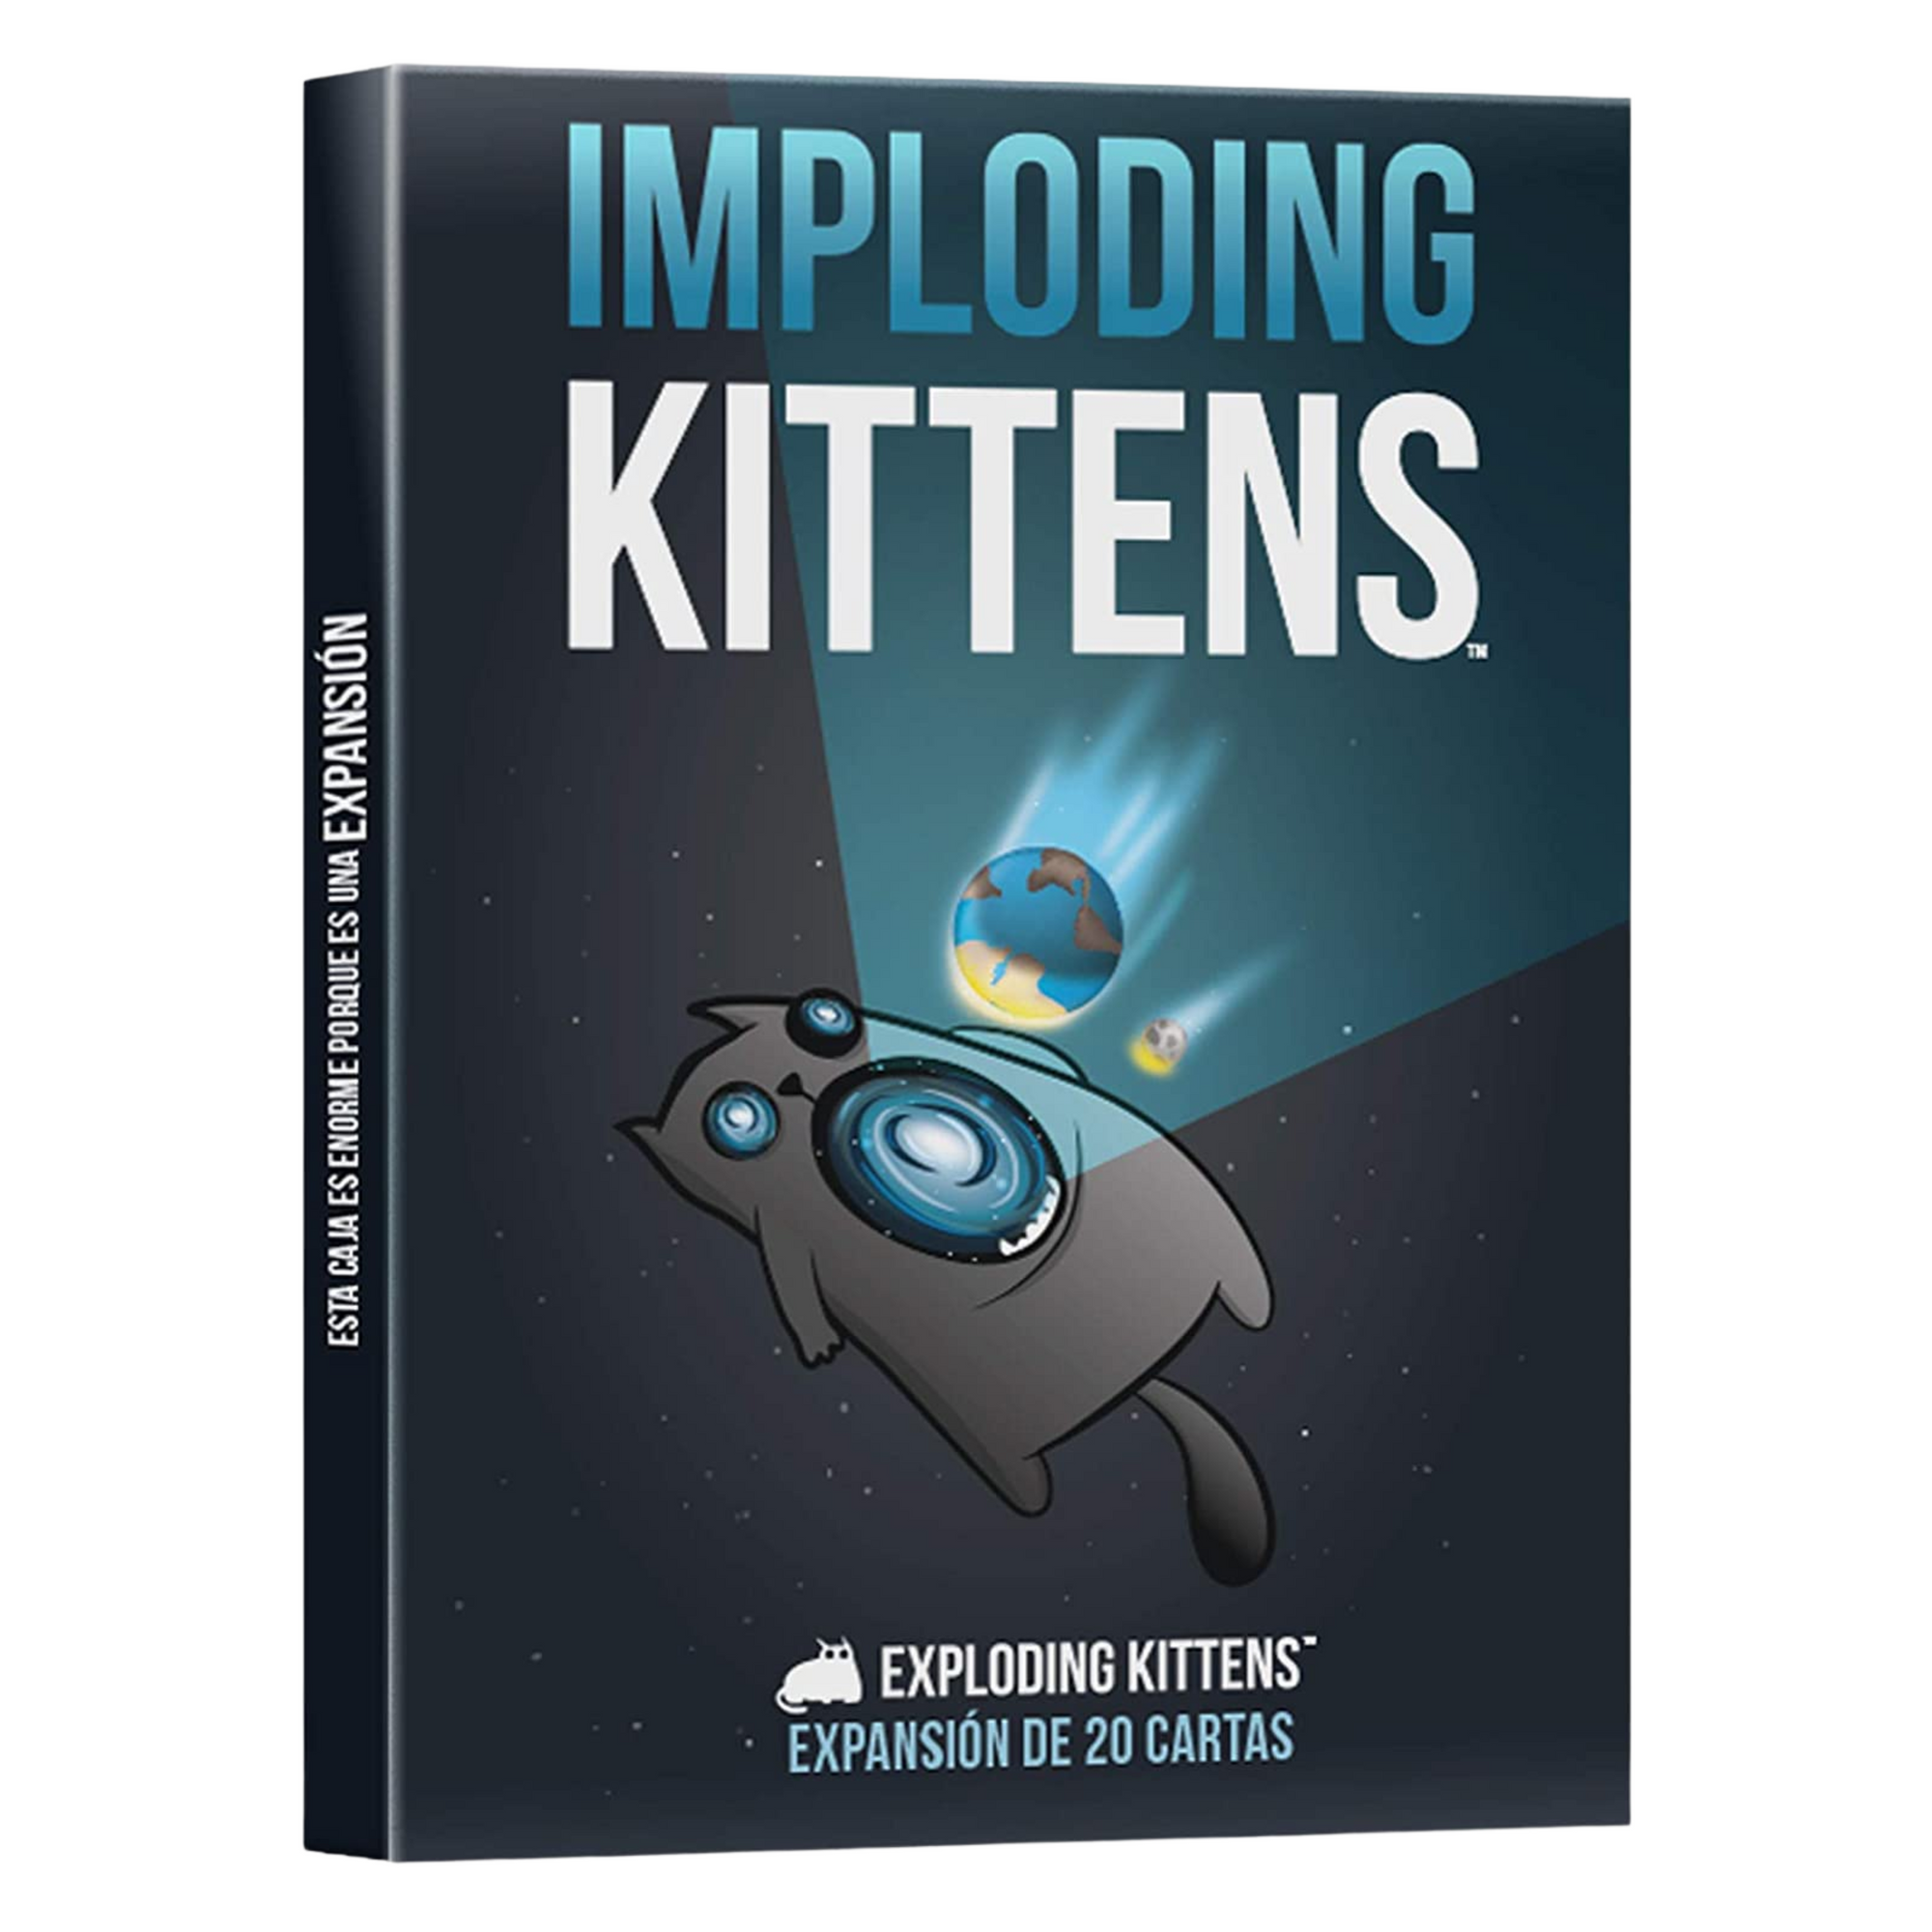 Imploding Kittens - cartas de expansión